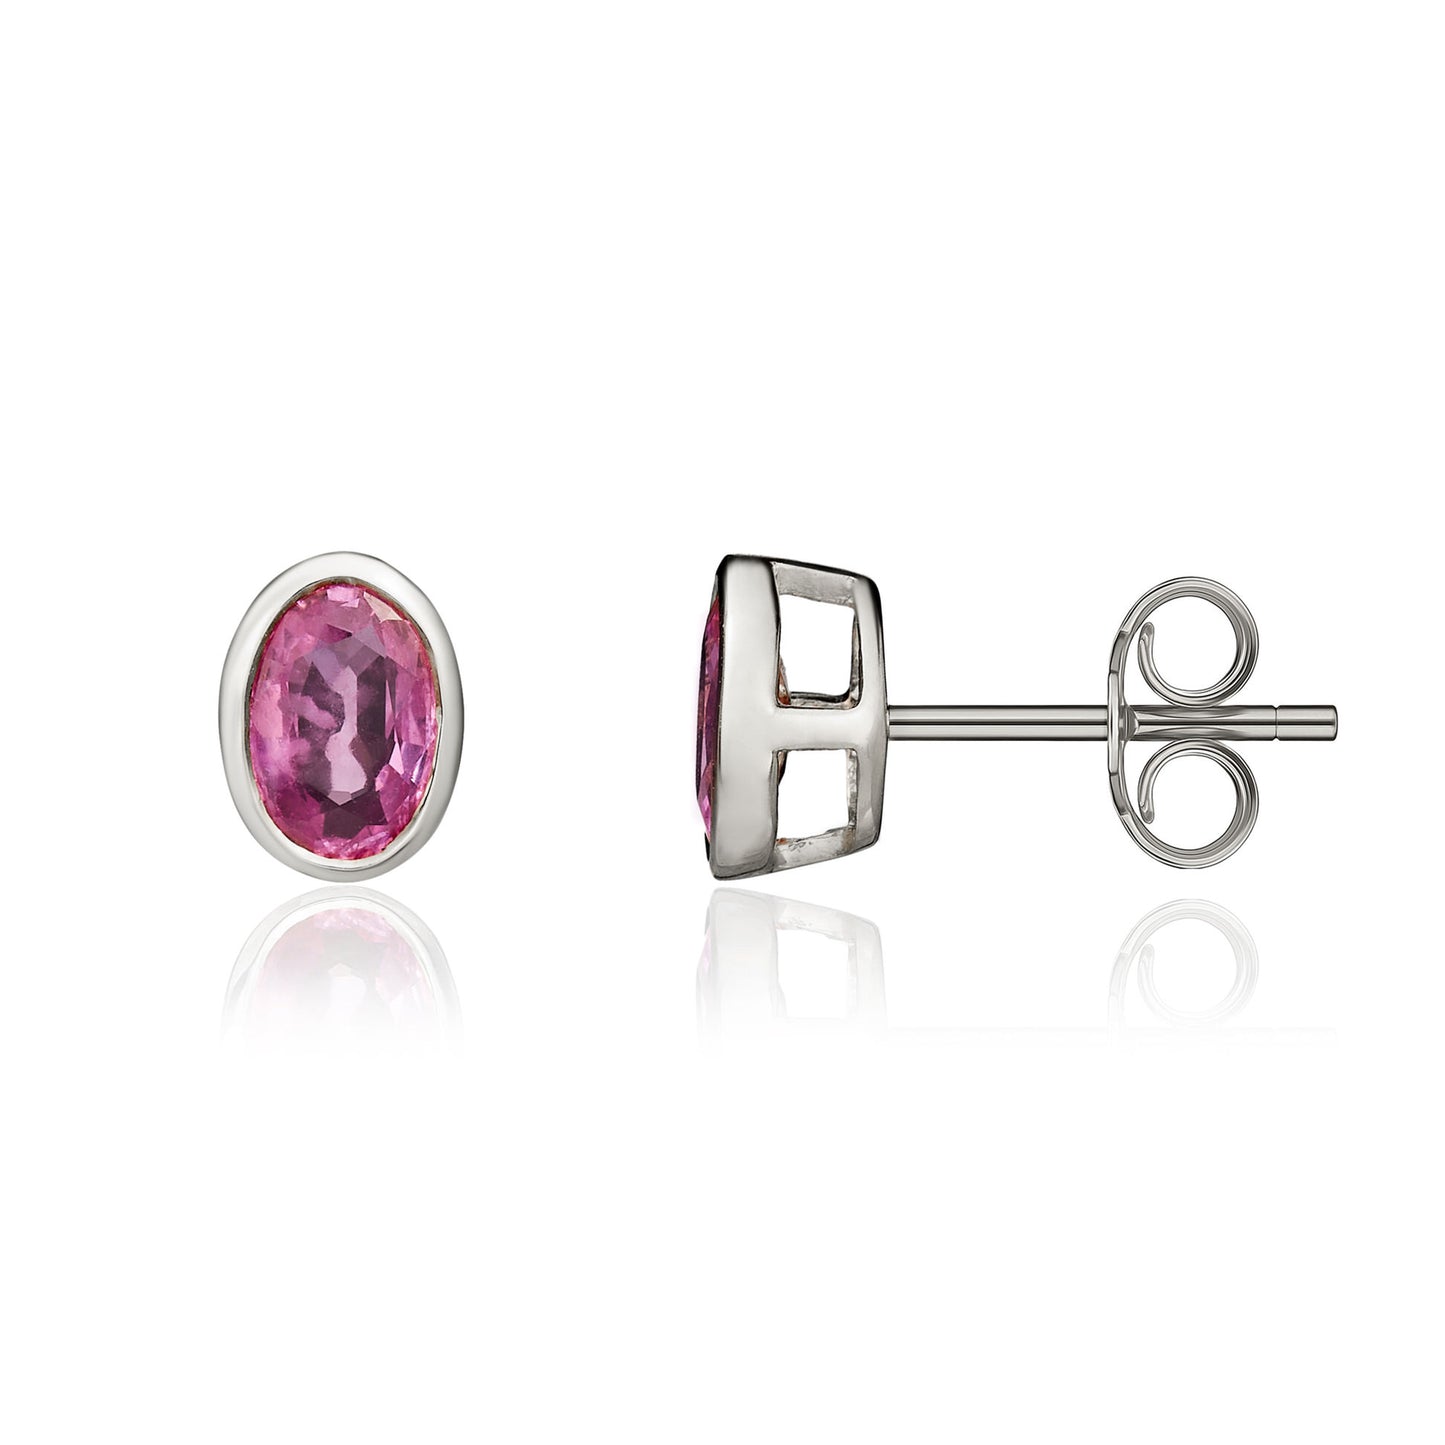 9K White Gold Oval Pink Sapphire Stud Earrings